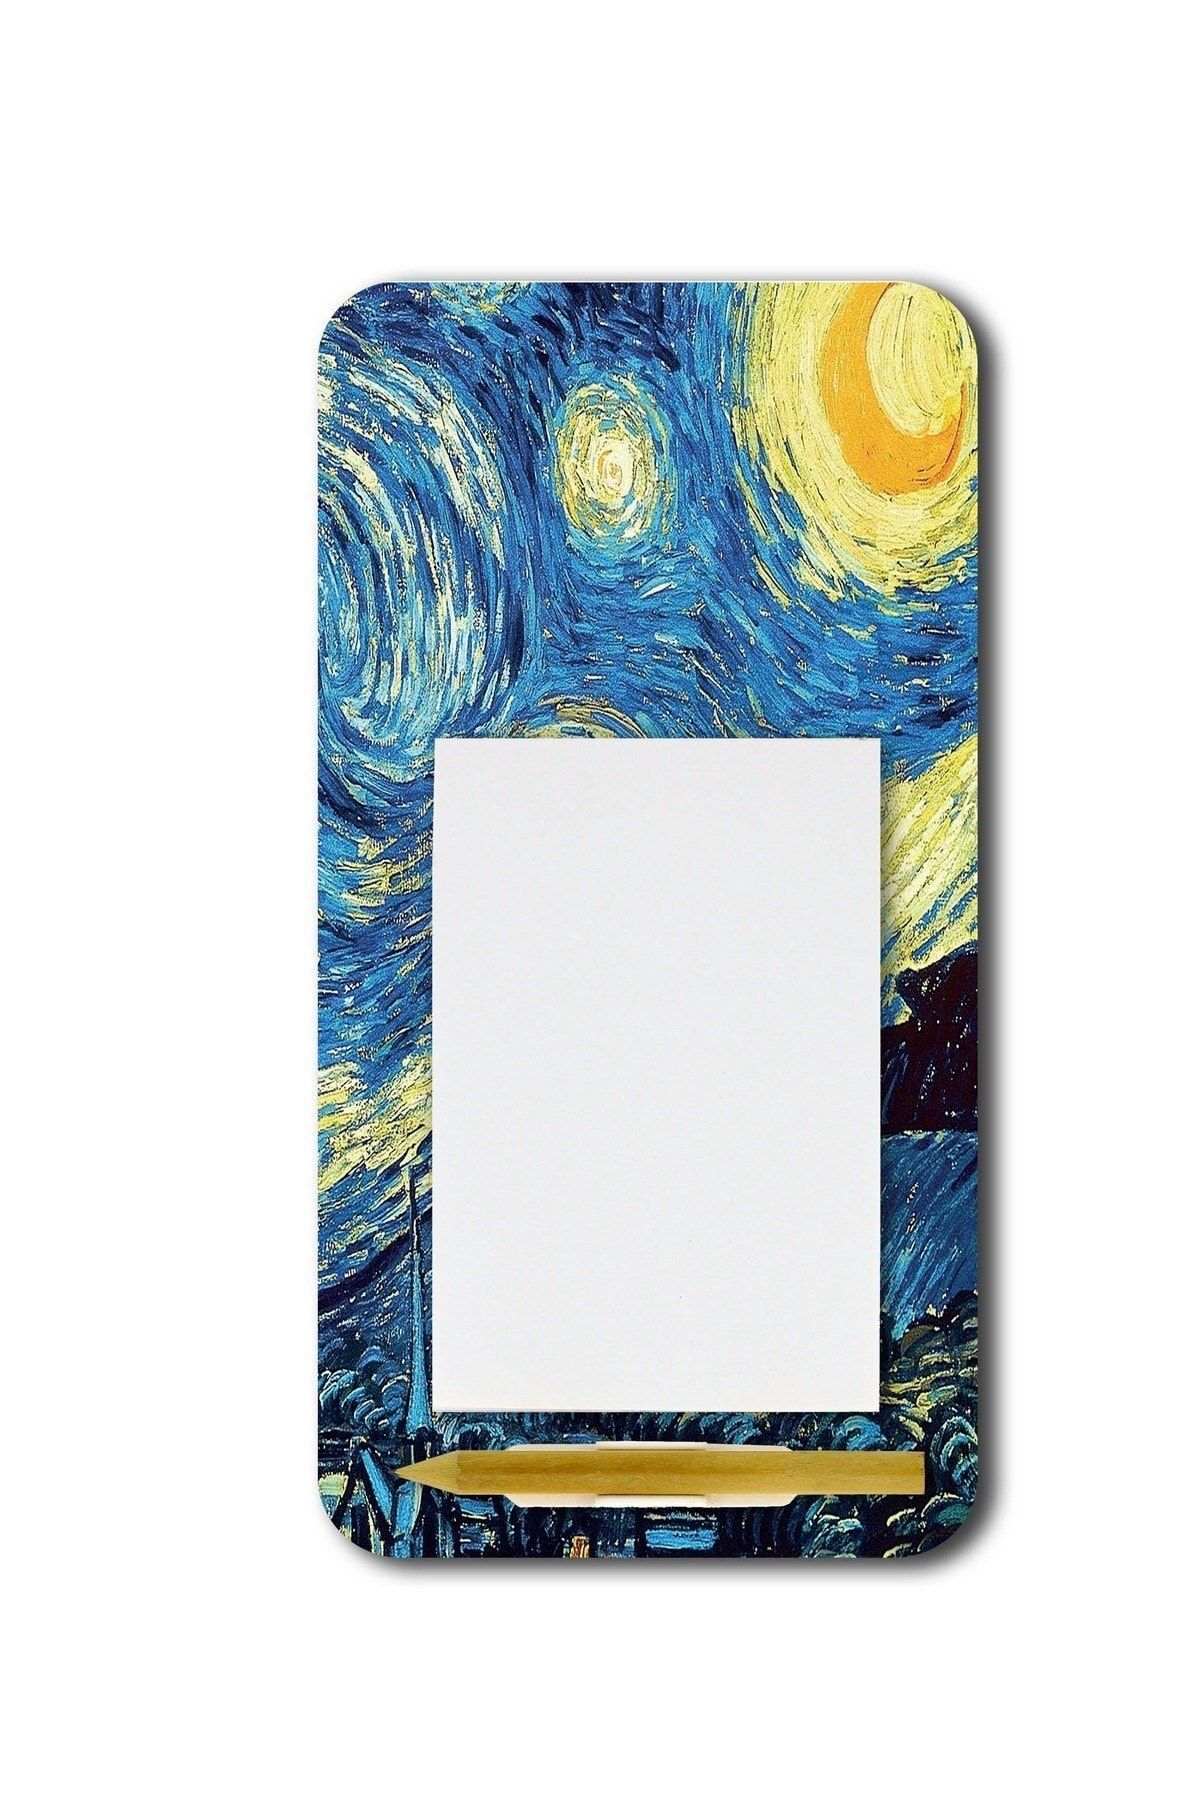 WuW Van Gogh Starry Night Magnetli Kalemli Notluk Buzdolabı Magneti